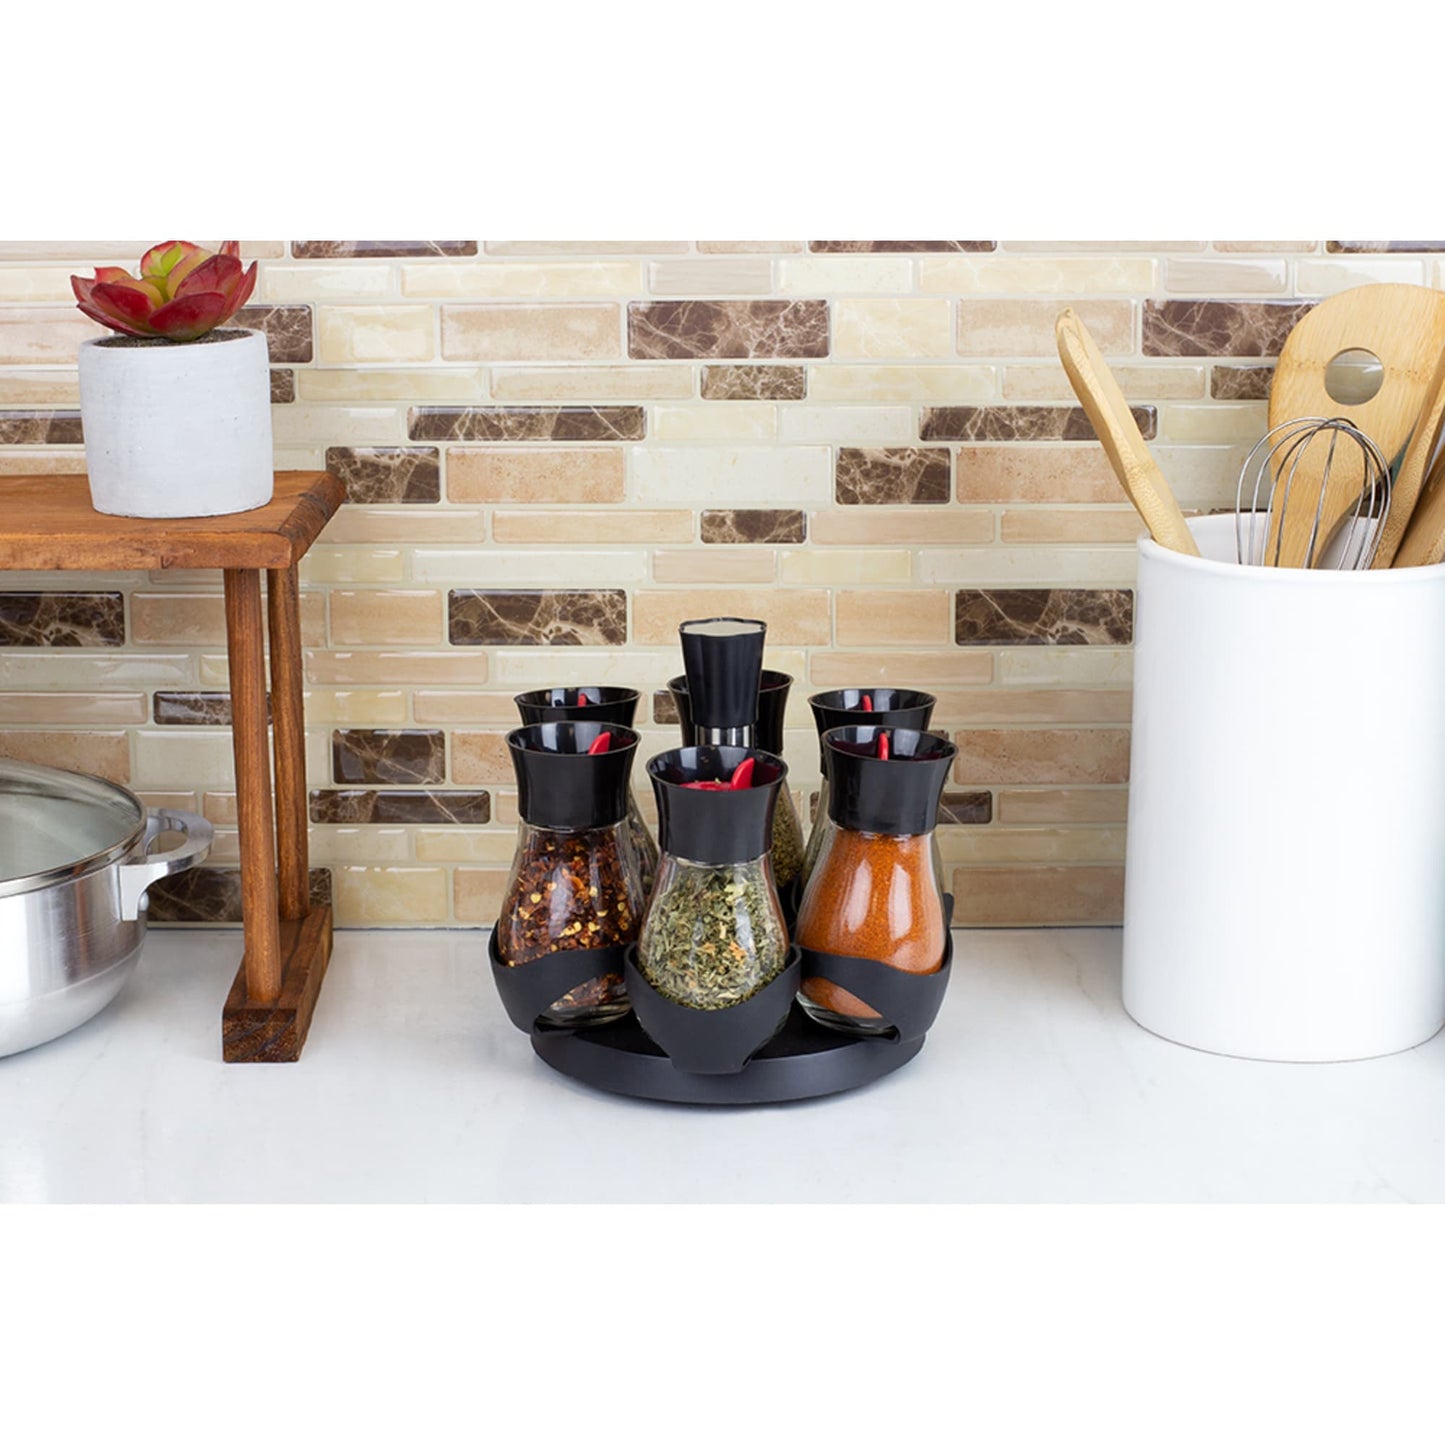 Home Basics Contemporary Low Profile Revolving 8-Jar Spice Rack Set, Black